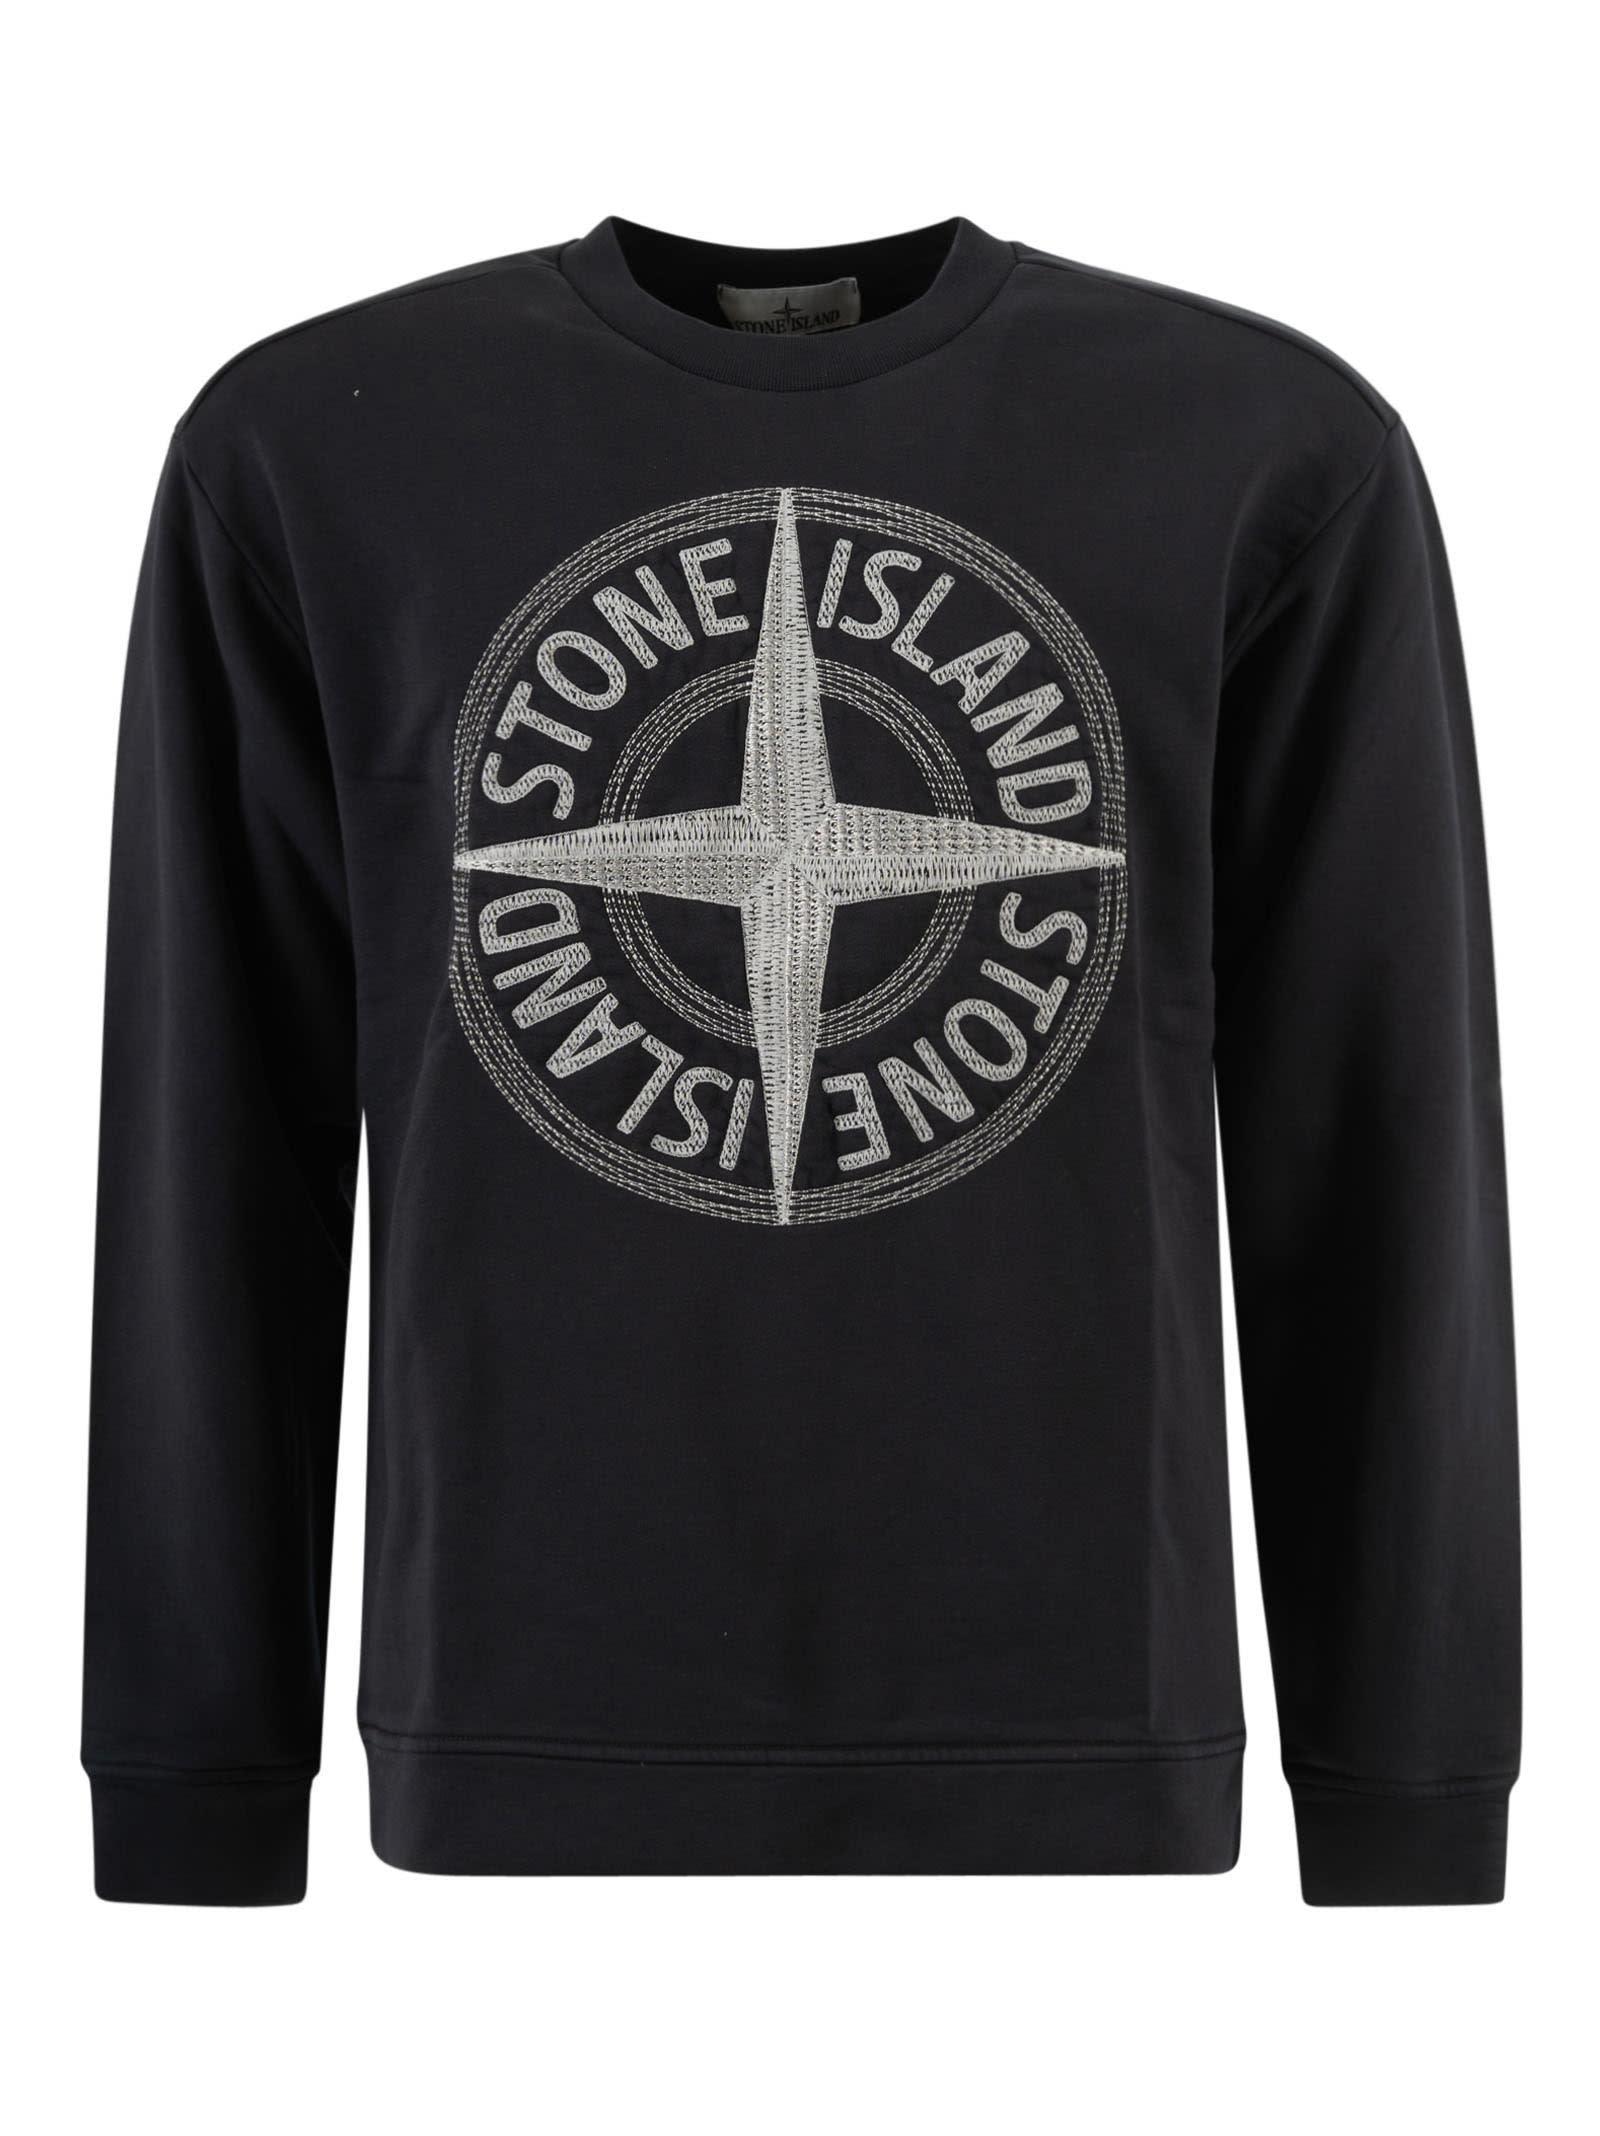 embroidered-logo sweatshirt, Stone Island